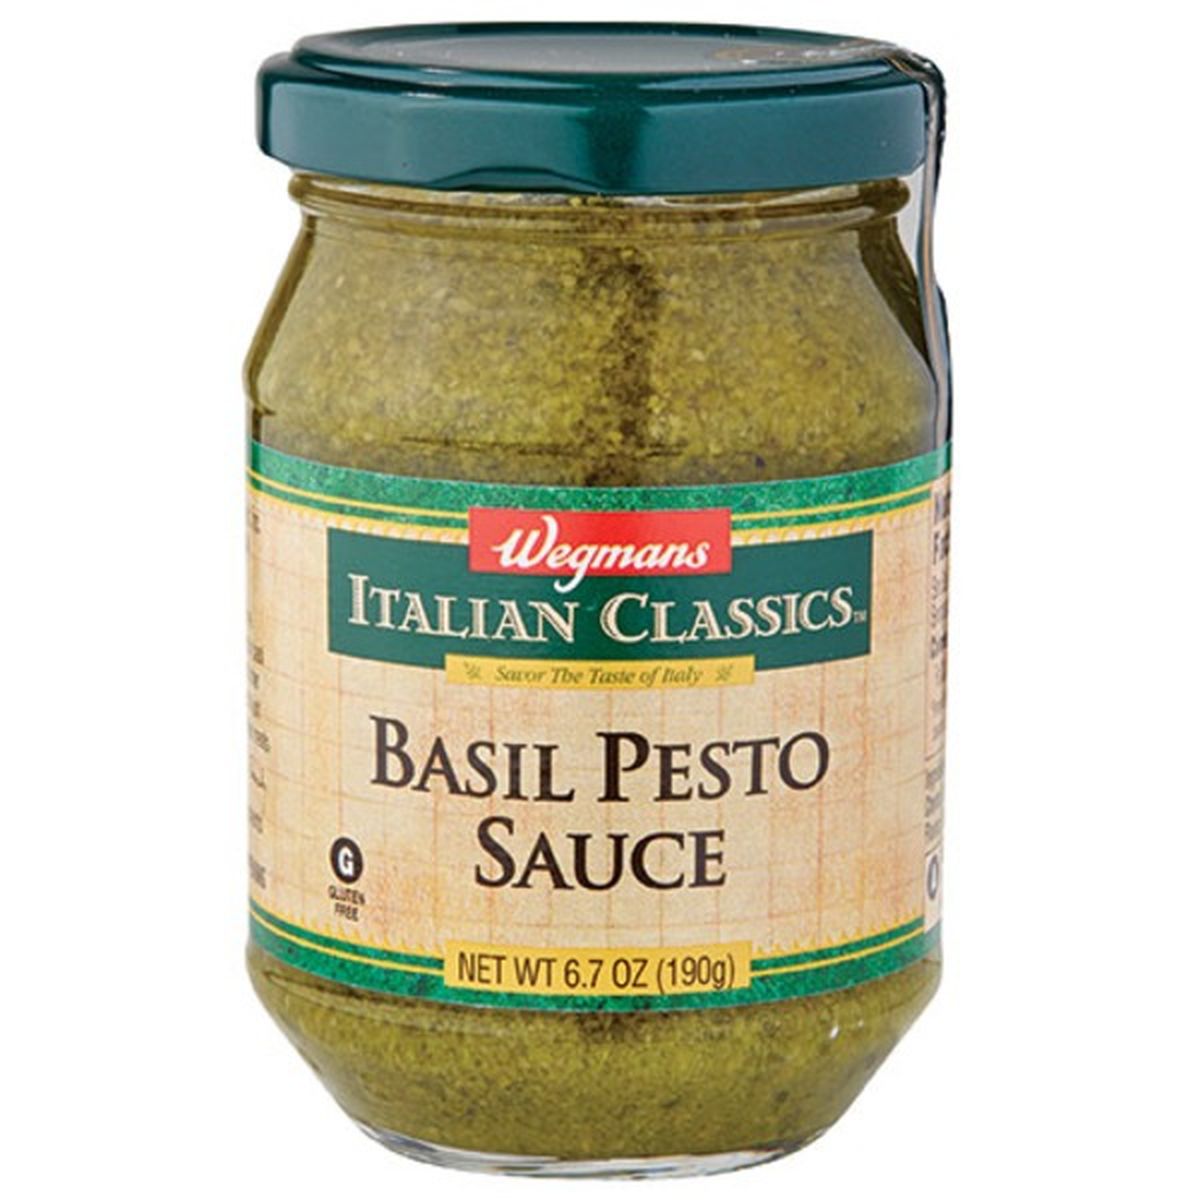 Calories in Wegmans Italian Classics Basil Pesto Sauce